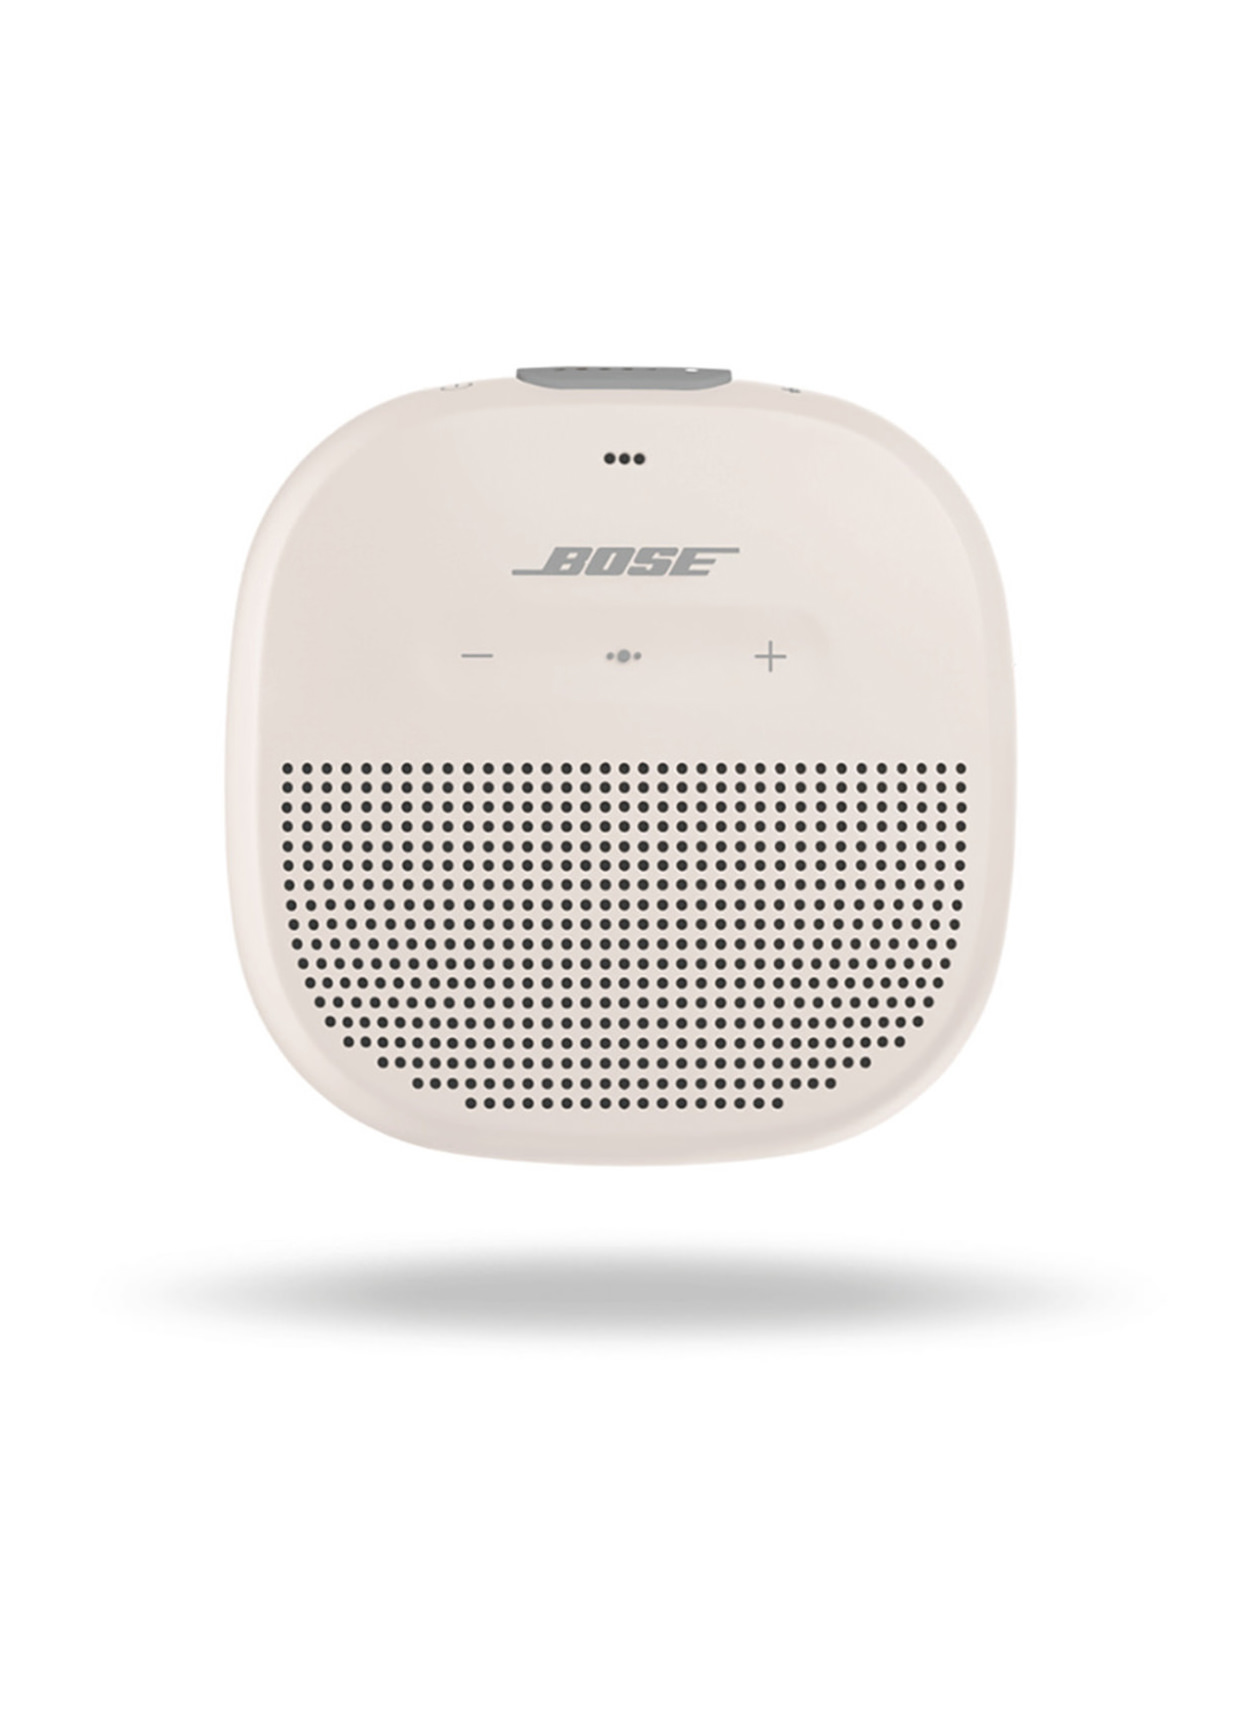 Bose SoundLink Micro Bluetooth Speaker (White Smoke) 783342-0400